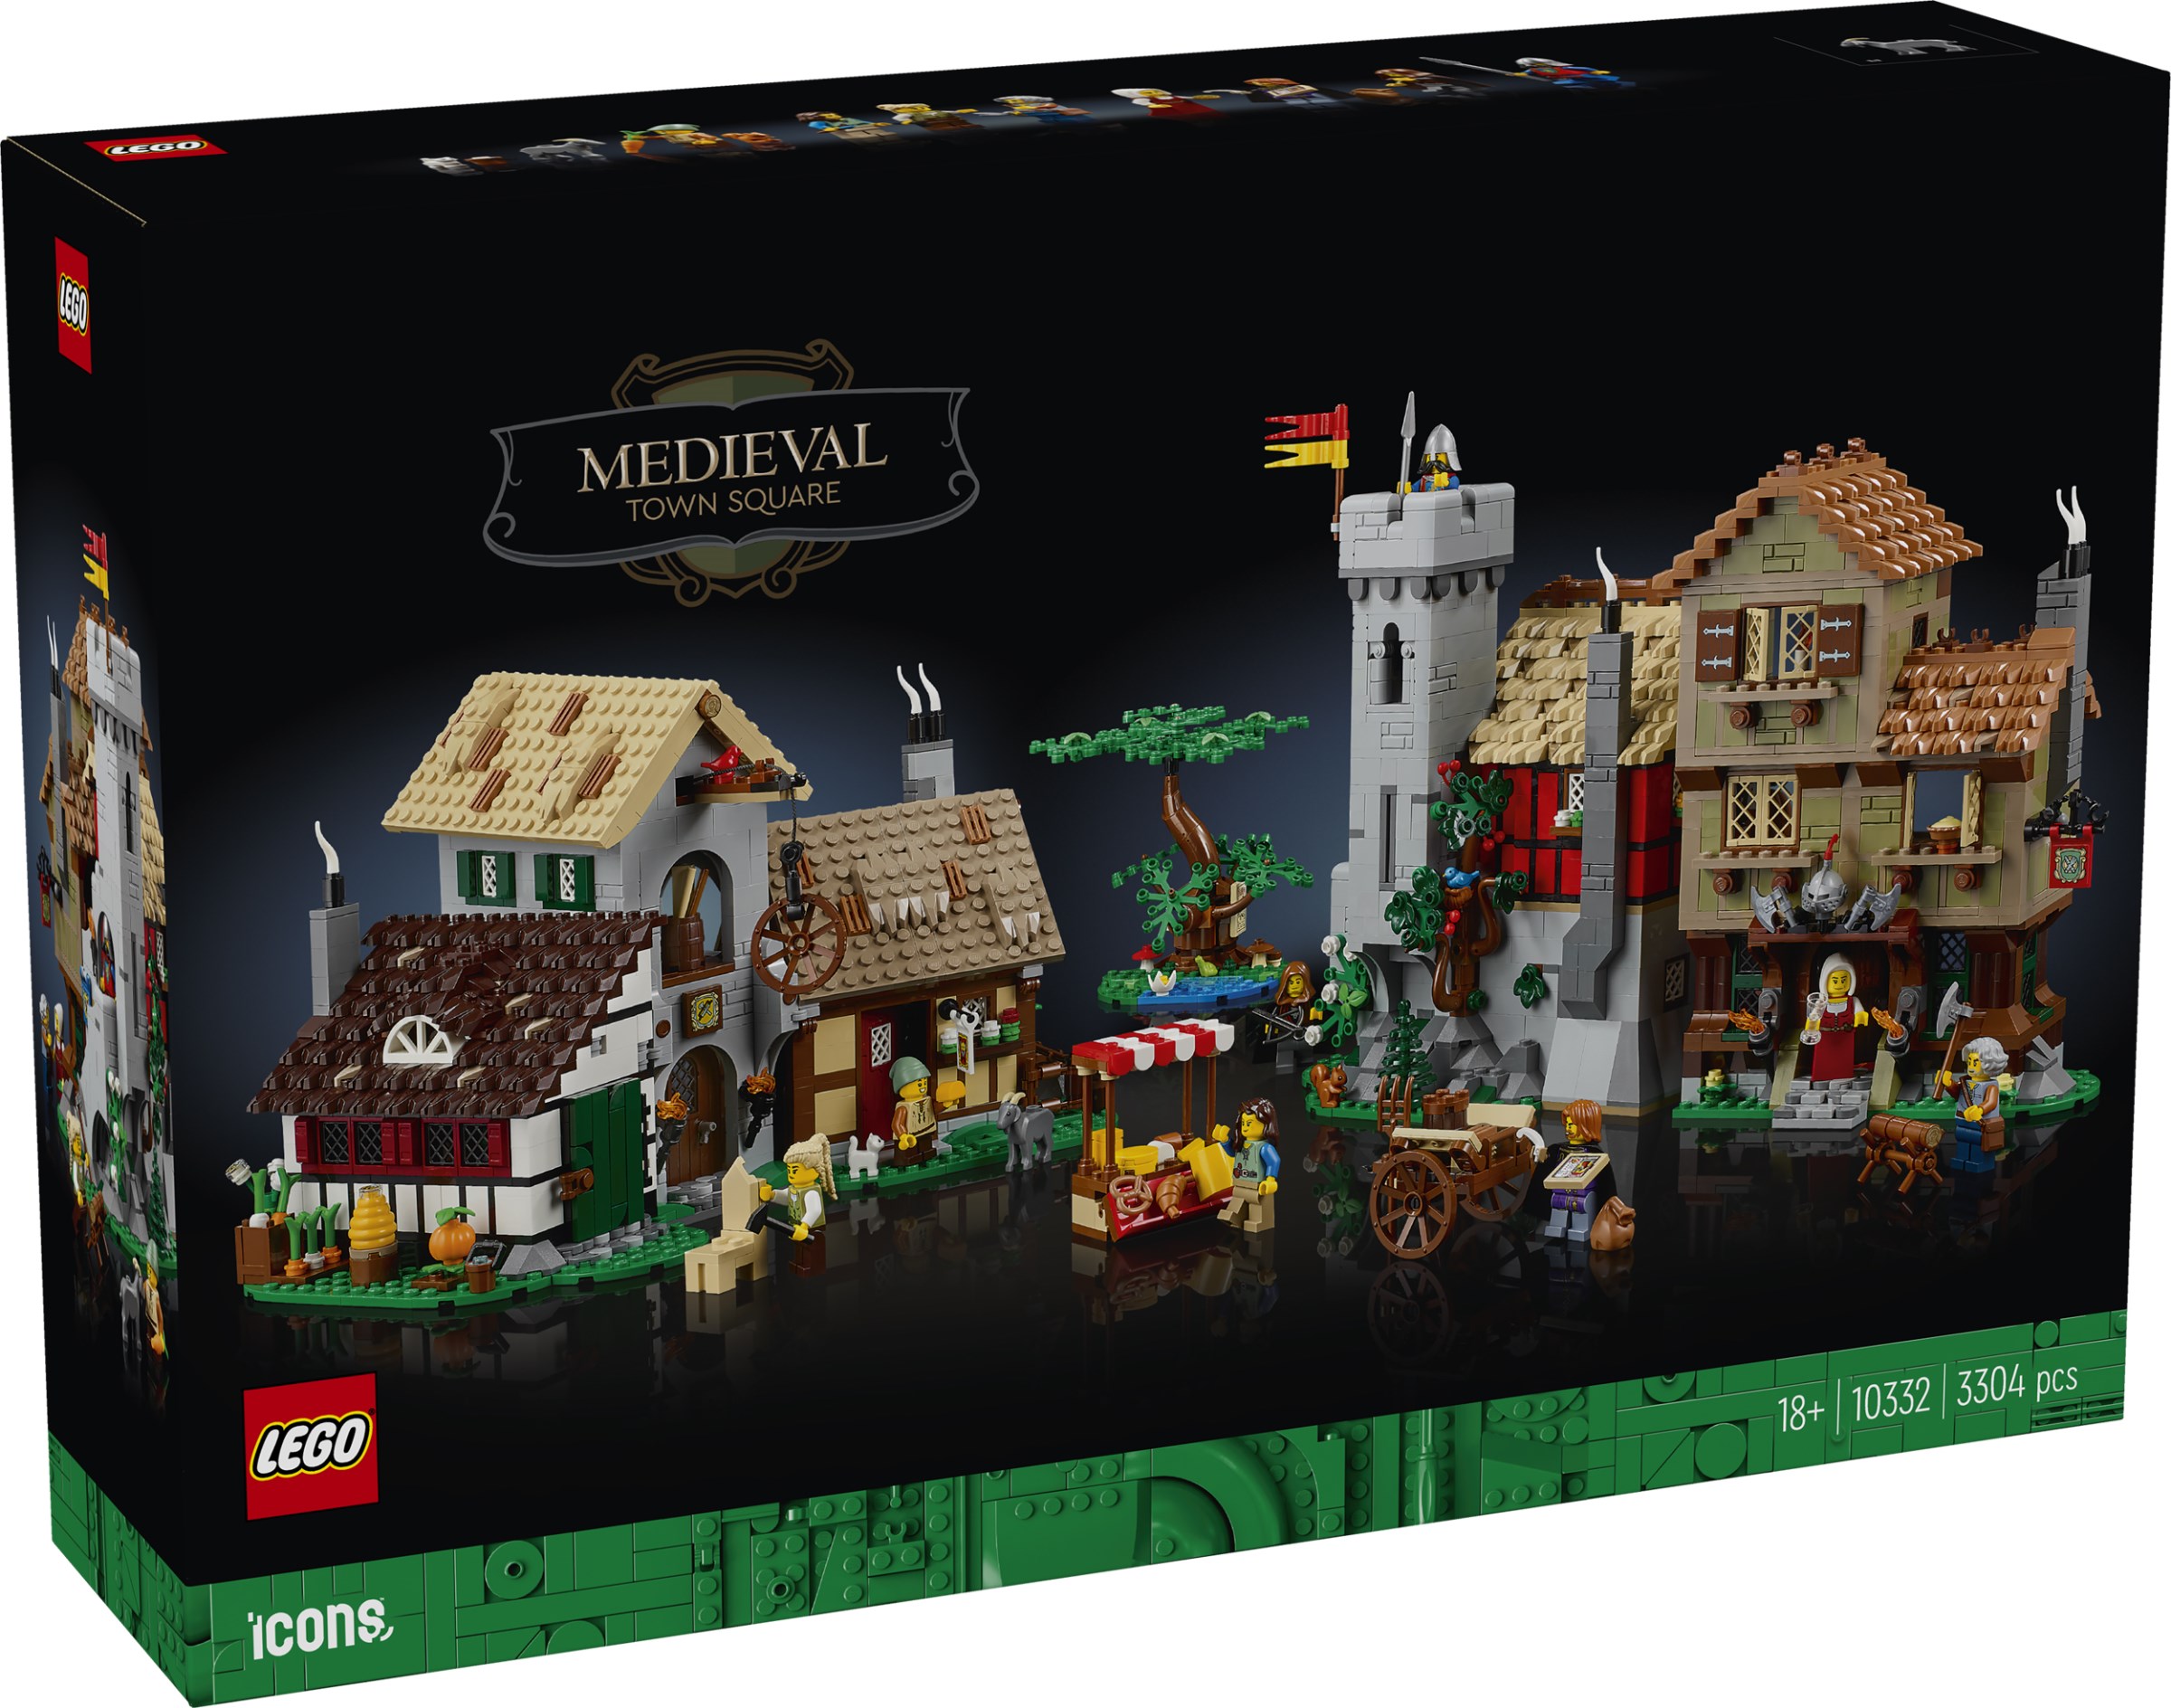 LEGO announces Medieval Town Square!